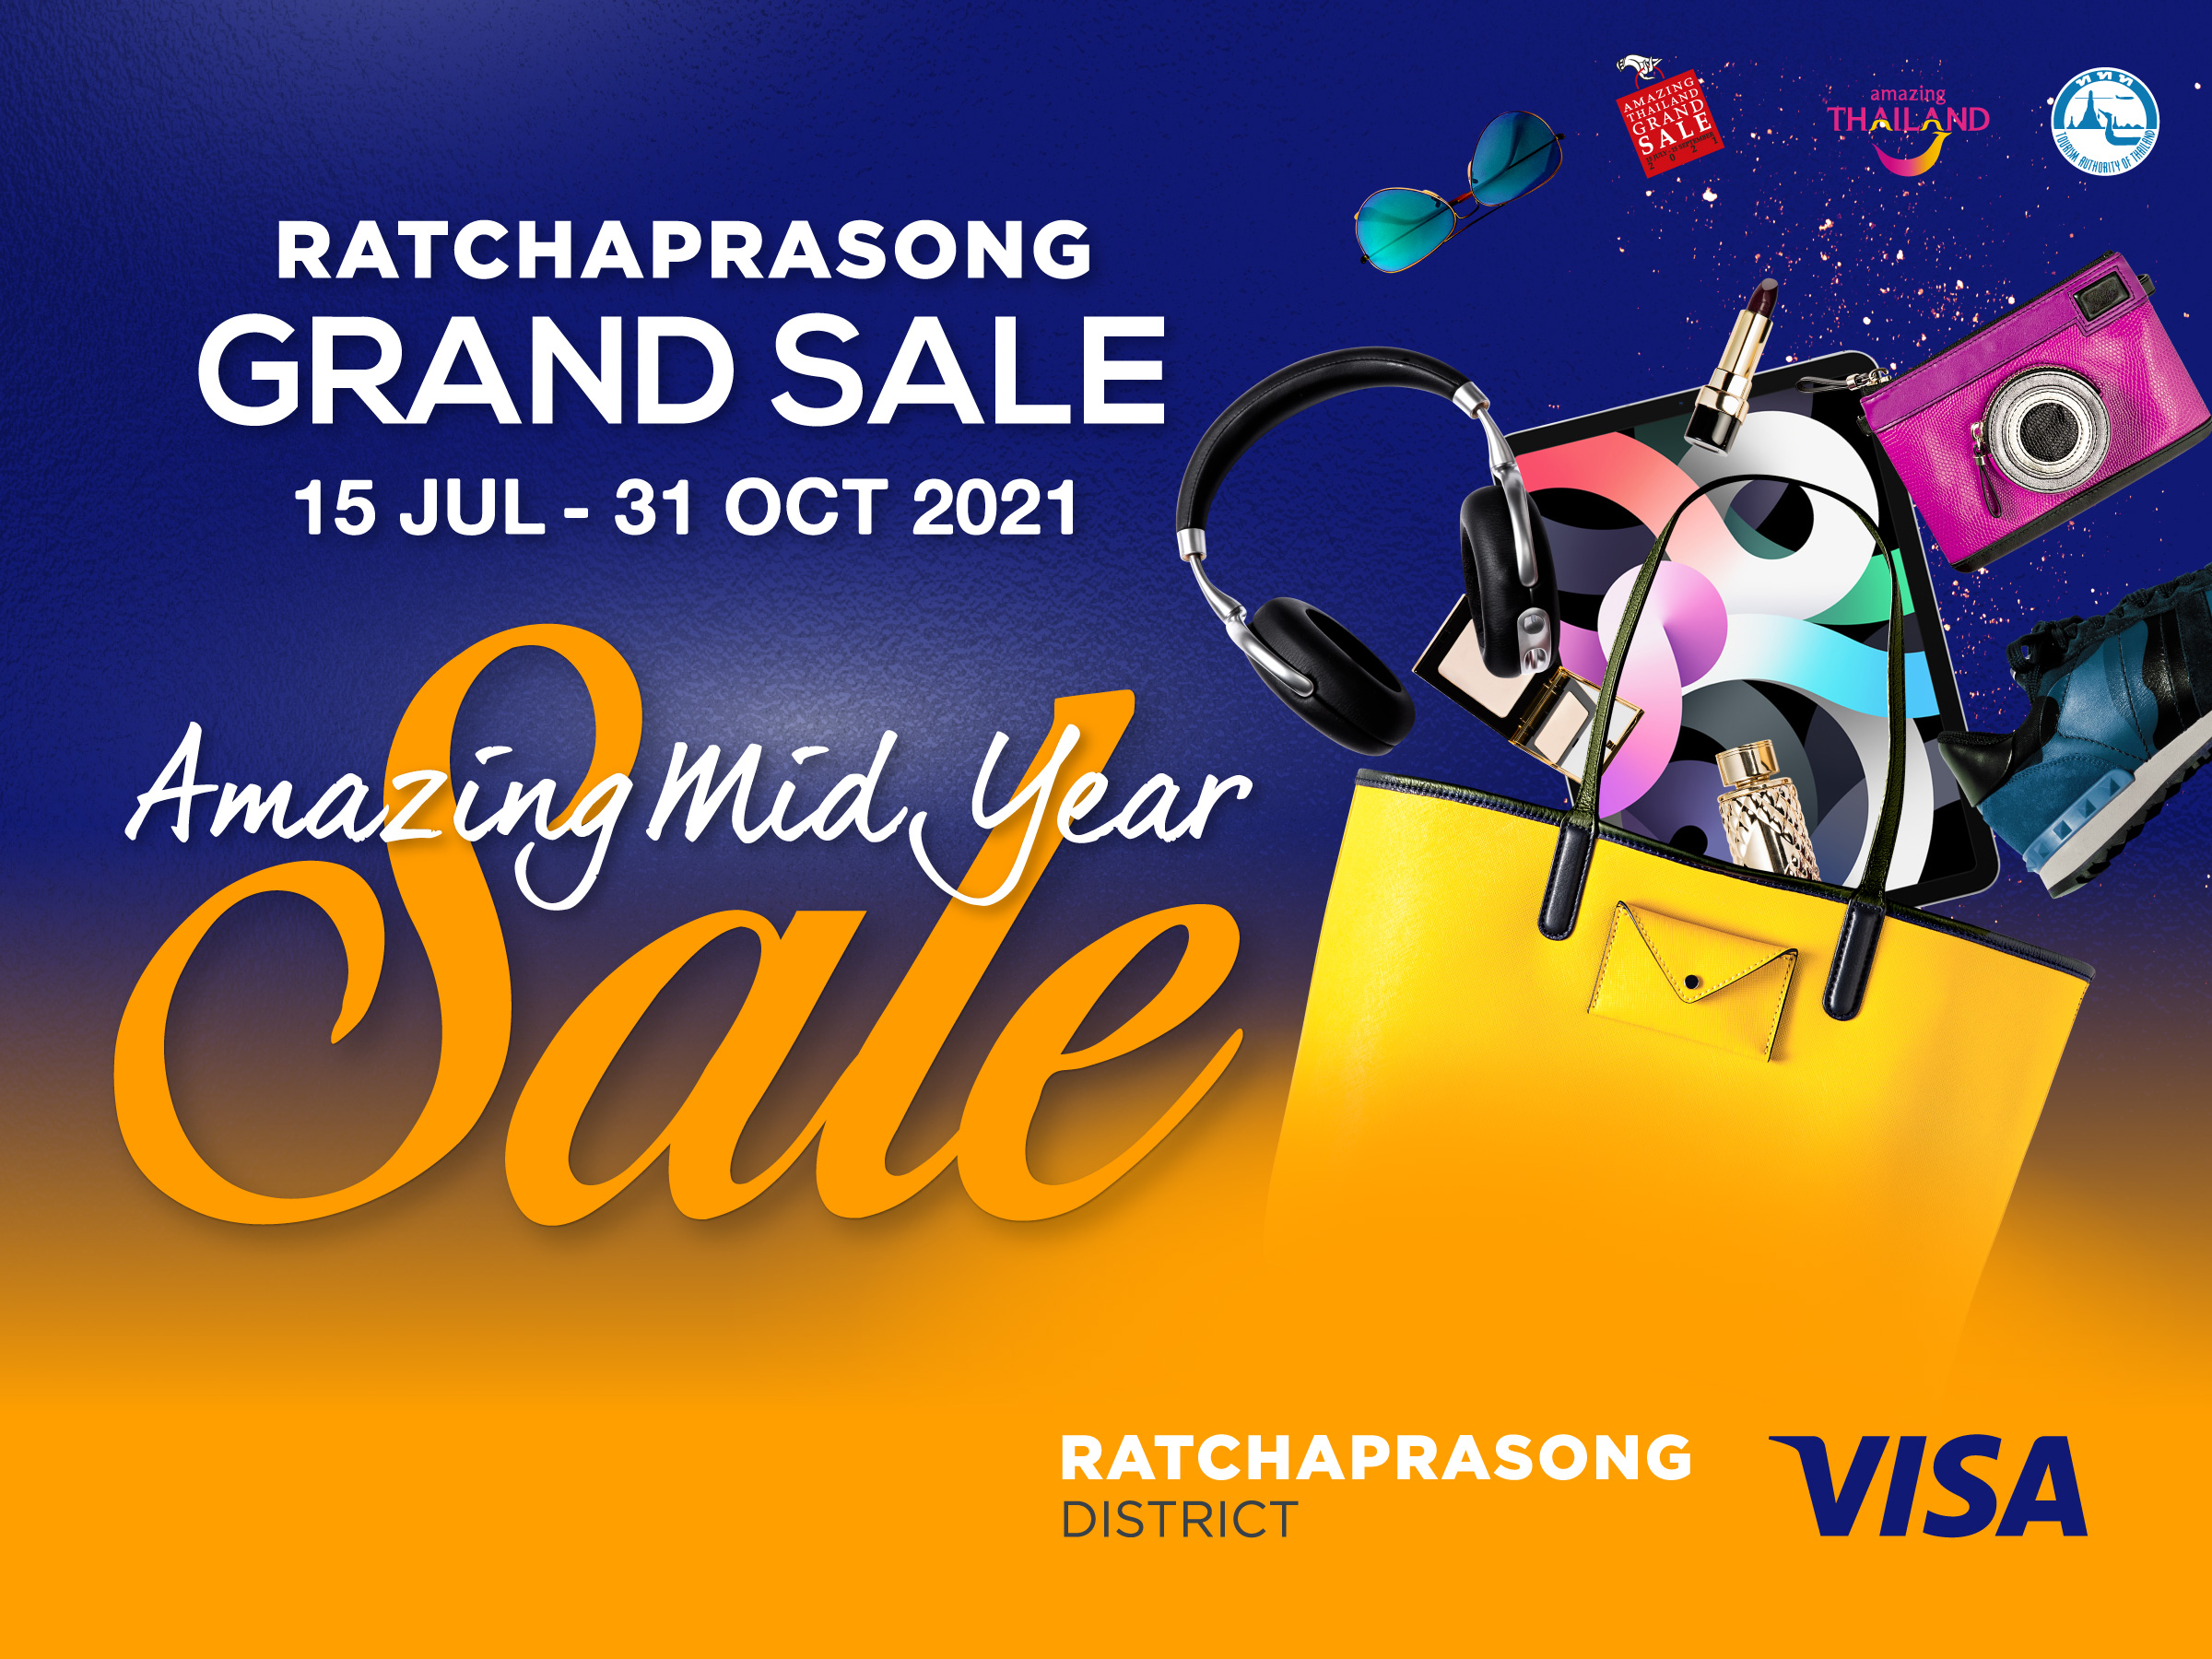 Ratchaprasong Grand Sale 2021 Amazing Mid Year Sale